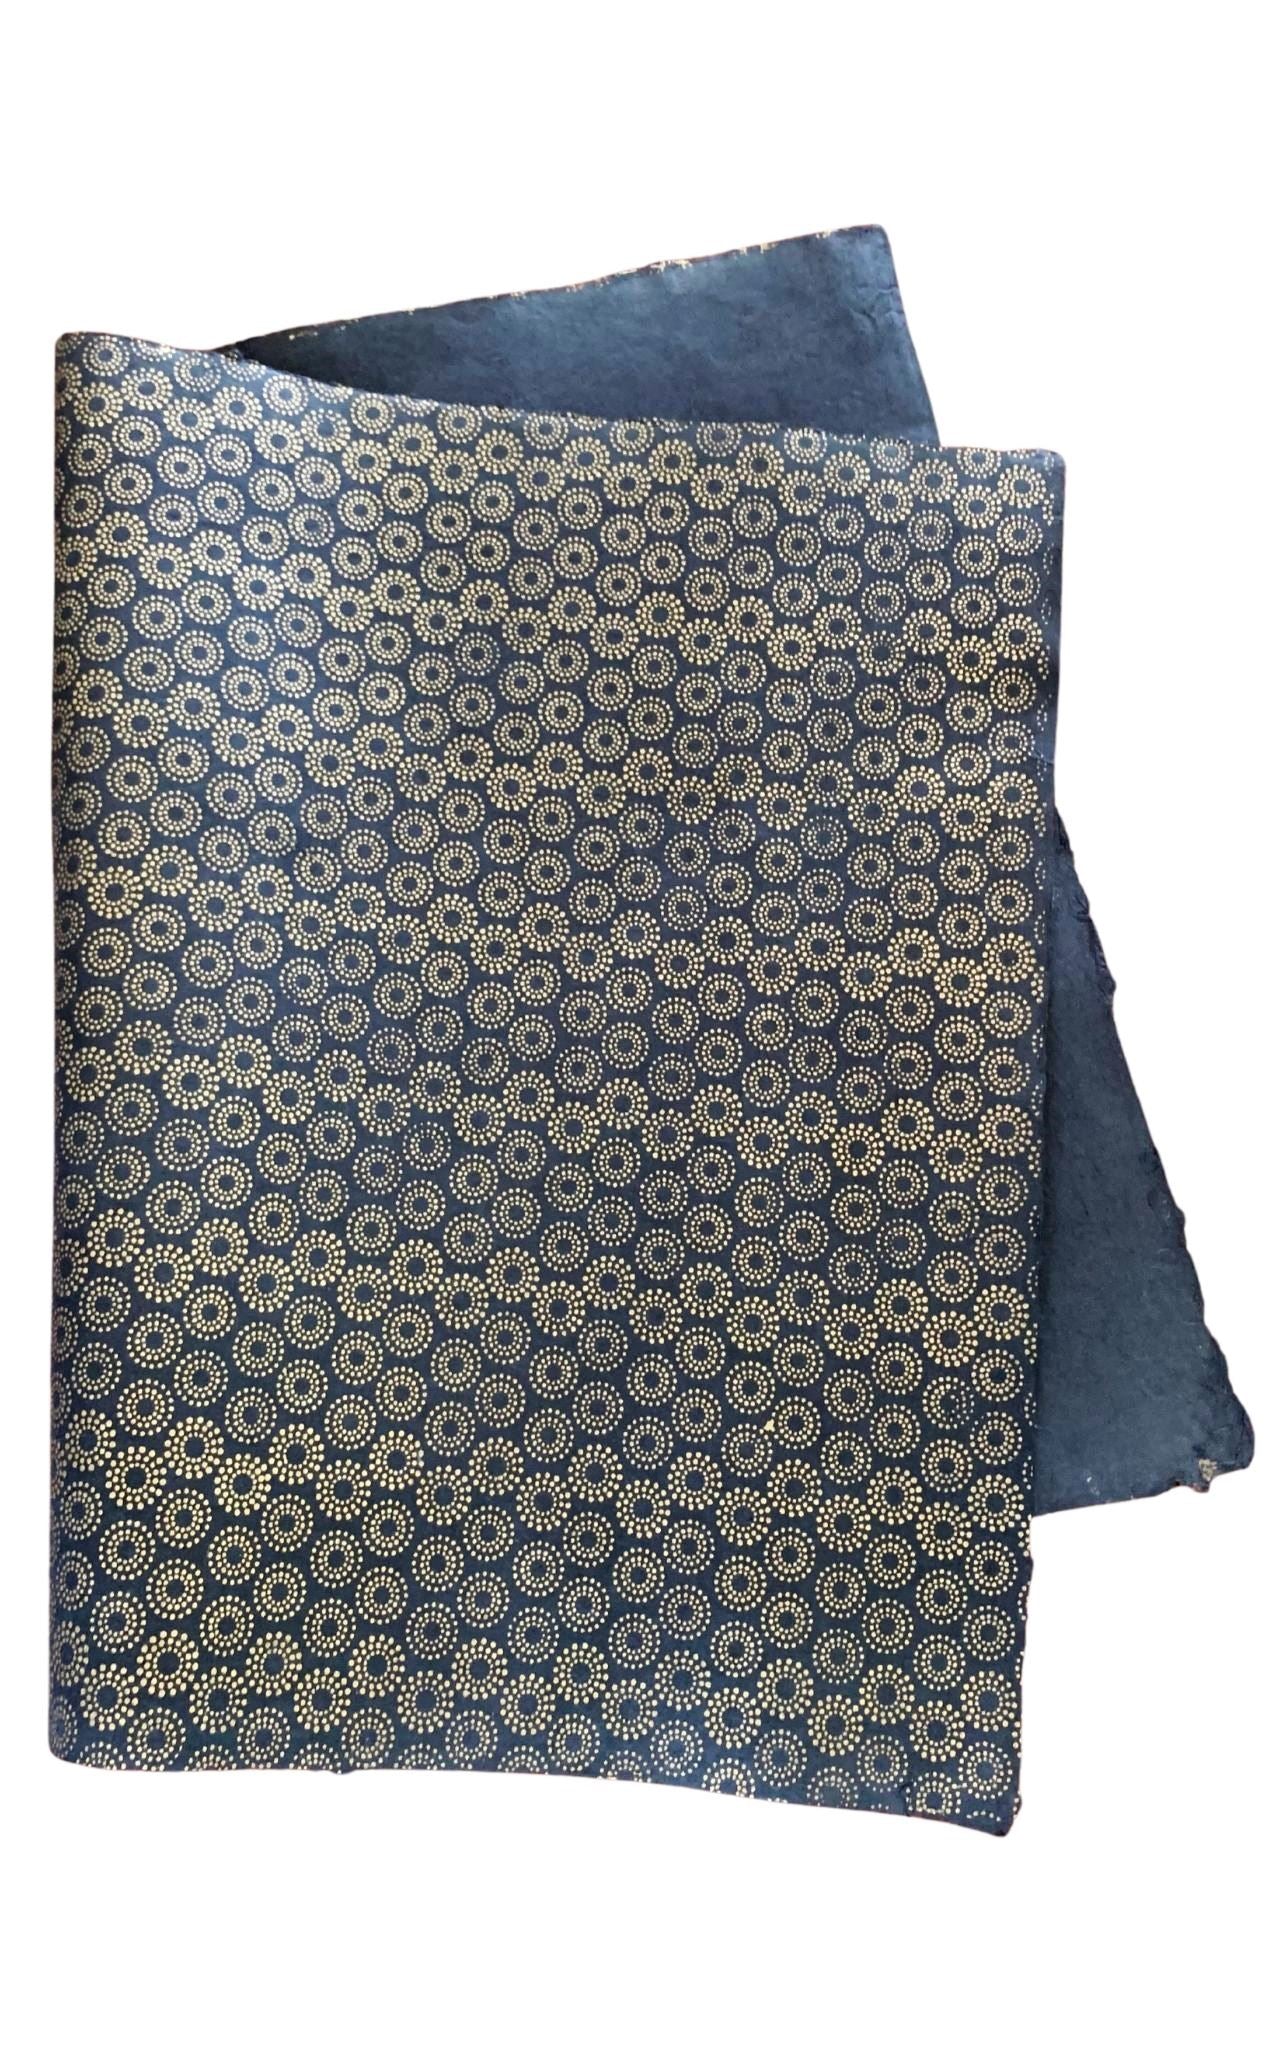 Surya Australia Fairtrade Treeles Lokta Paper Decorative Sheets from Nepal - black with gold print